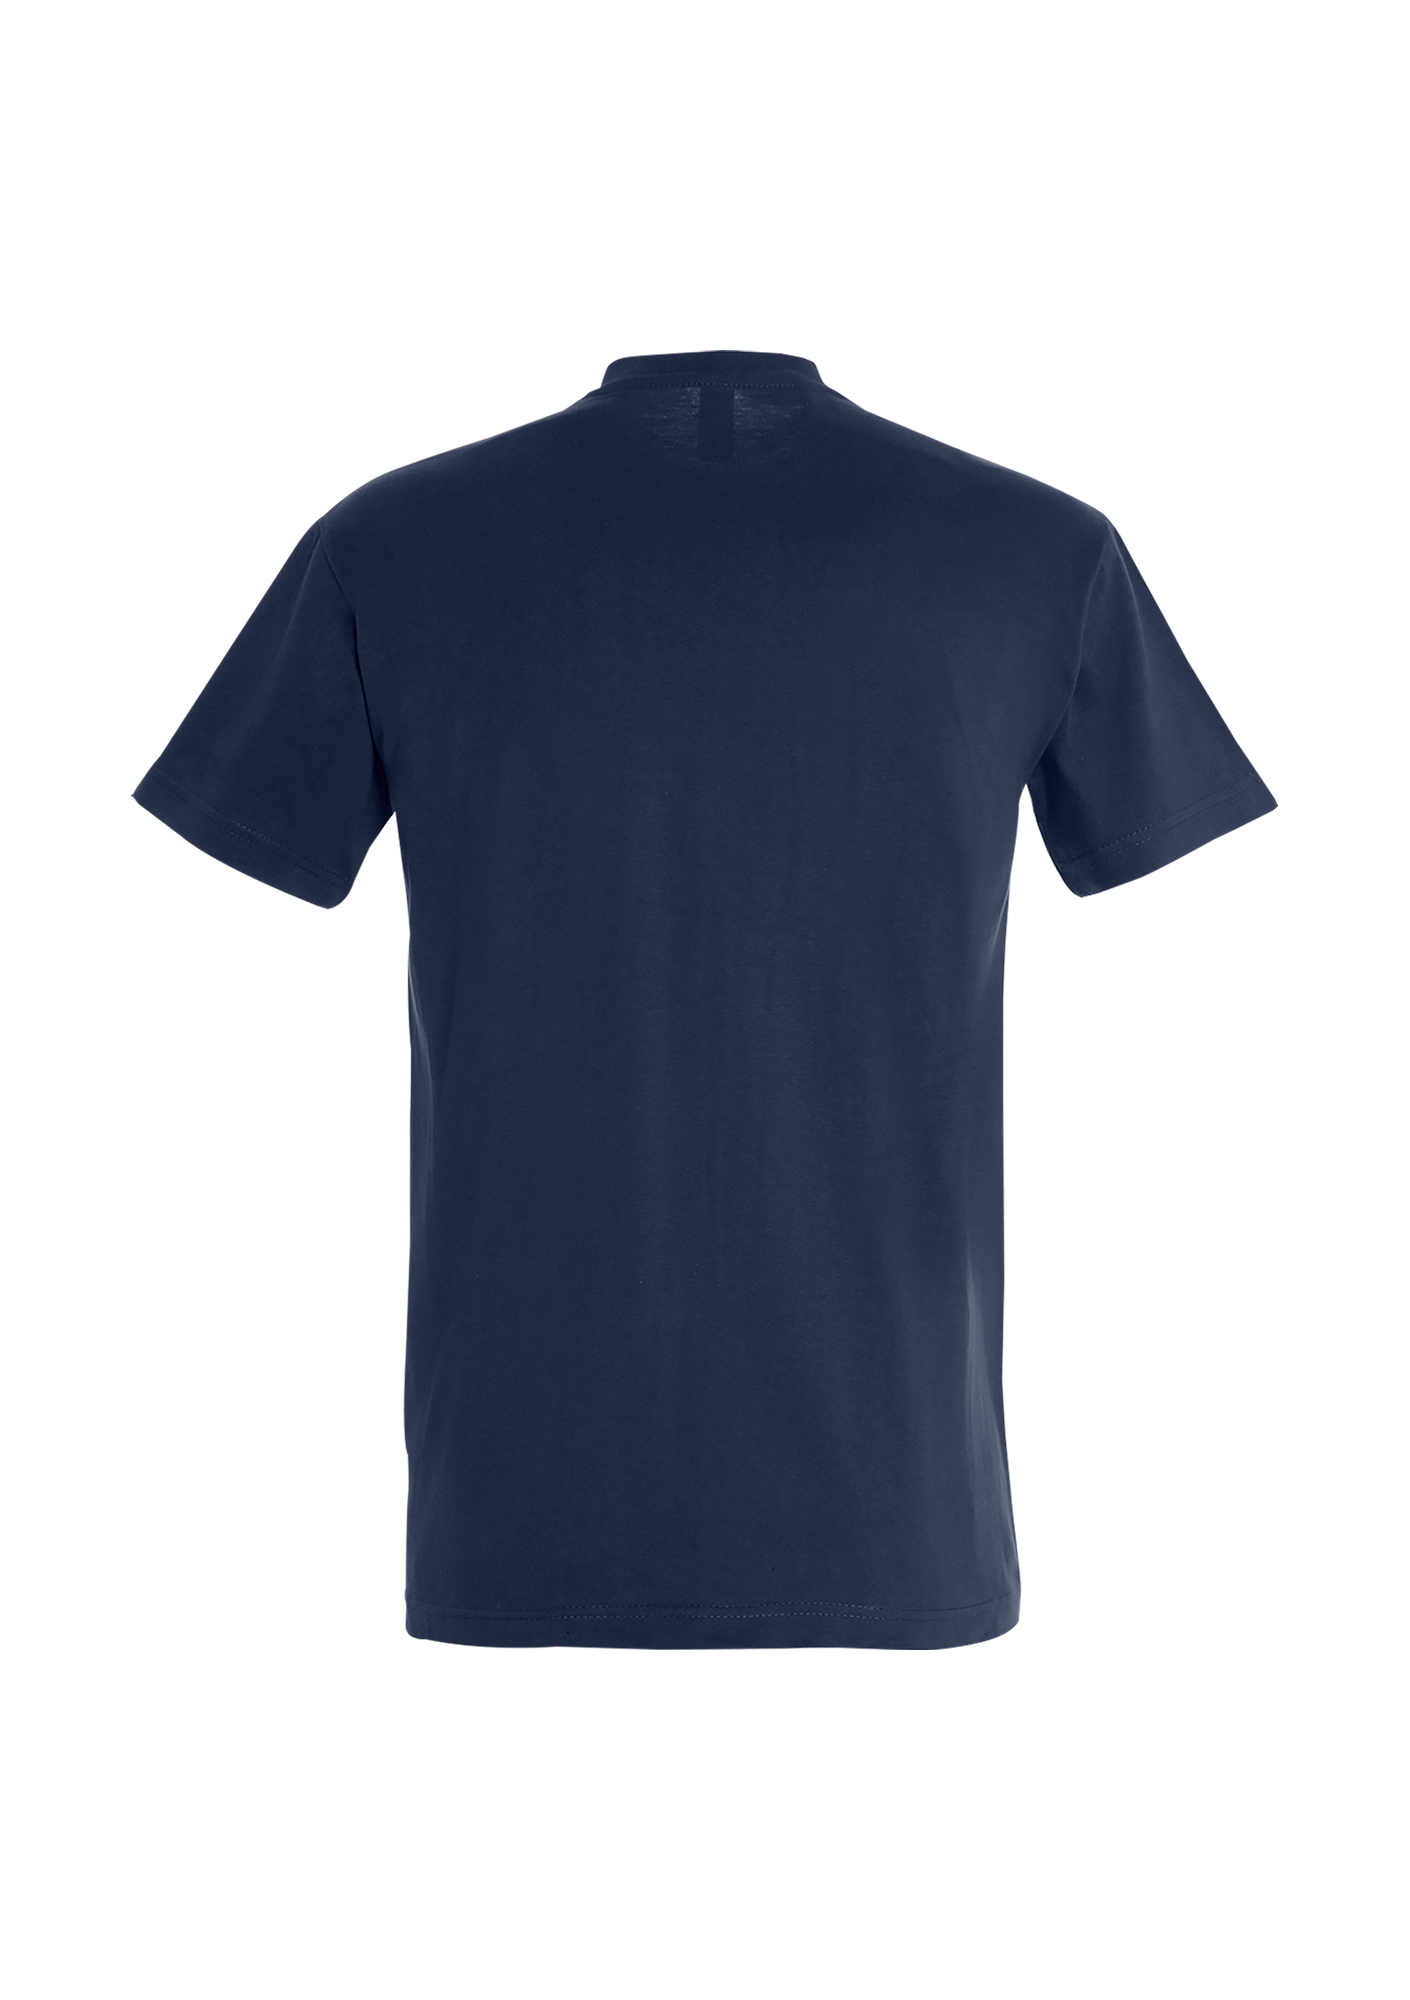 T-shirt Adulte premium "Thirty Years"navy - 73-IMPERIAL30ANSDOS